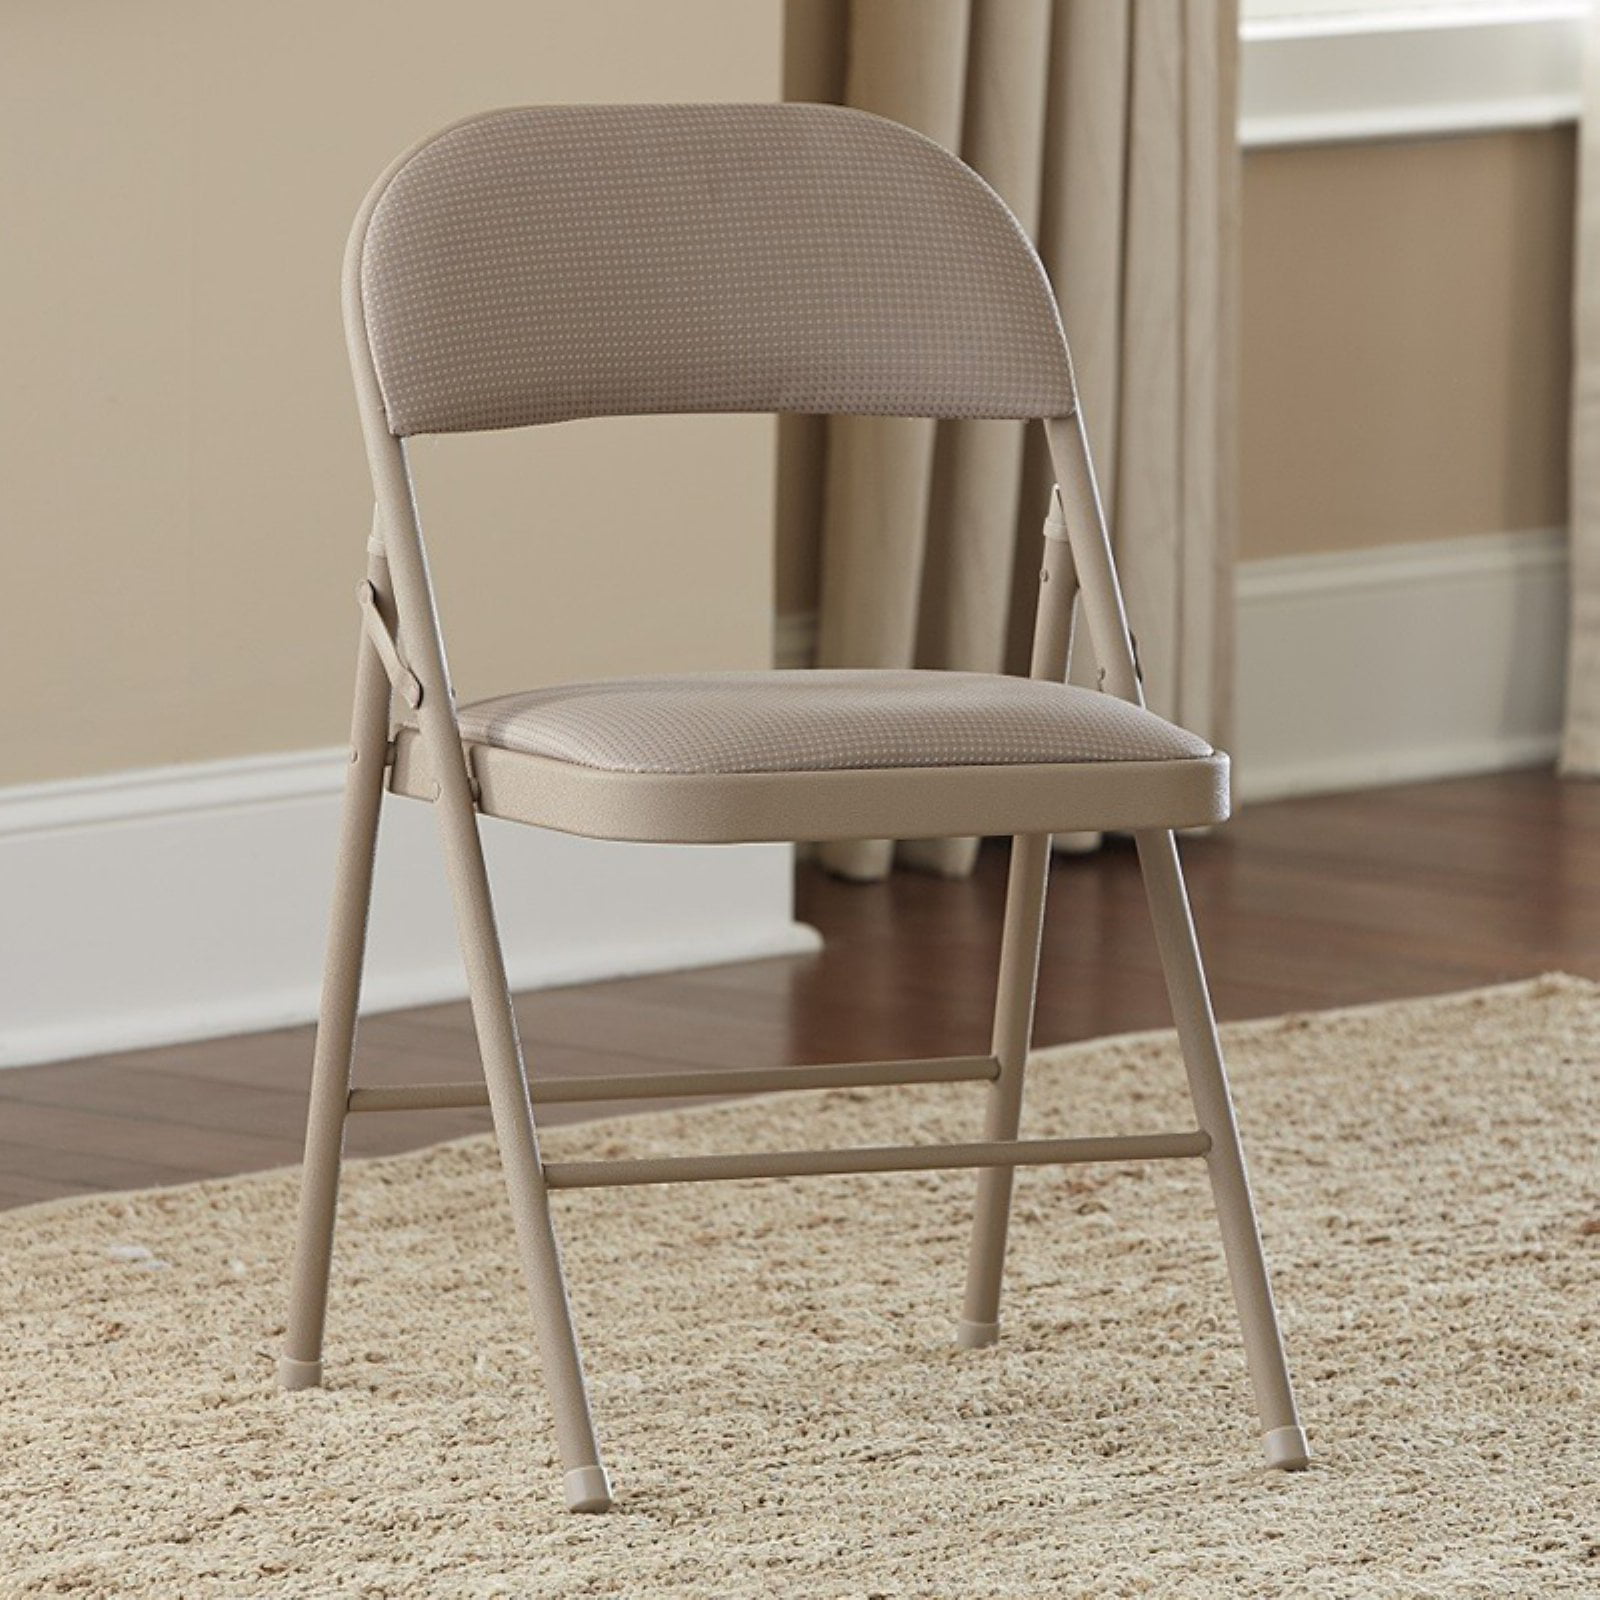  Cosco  Deluxe Fabric Folding  Chair  Set of 4 Walmart com 